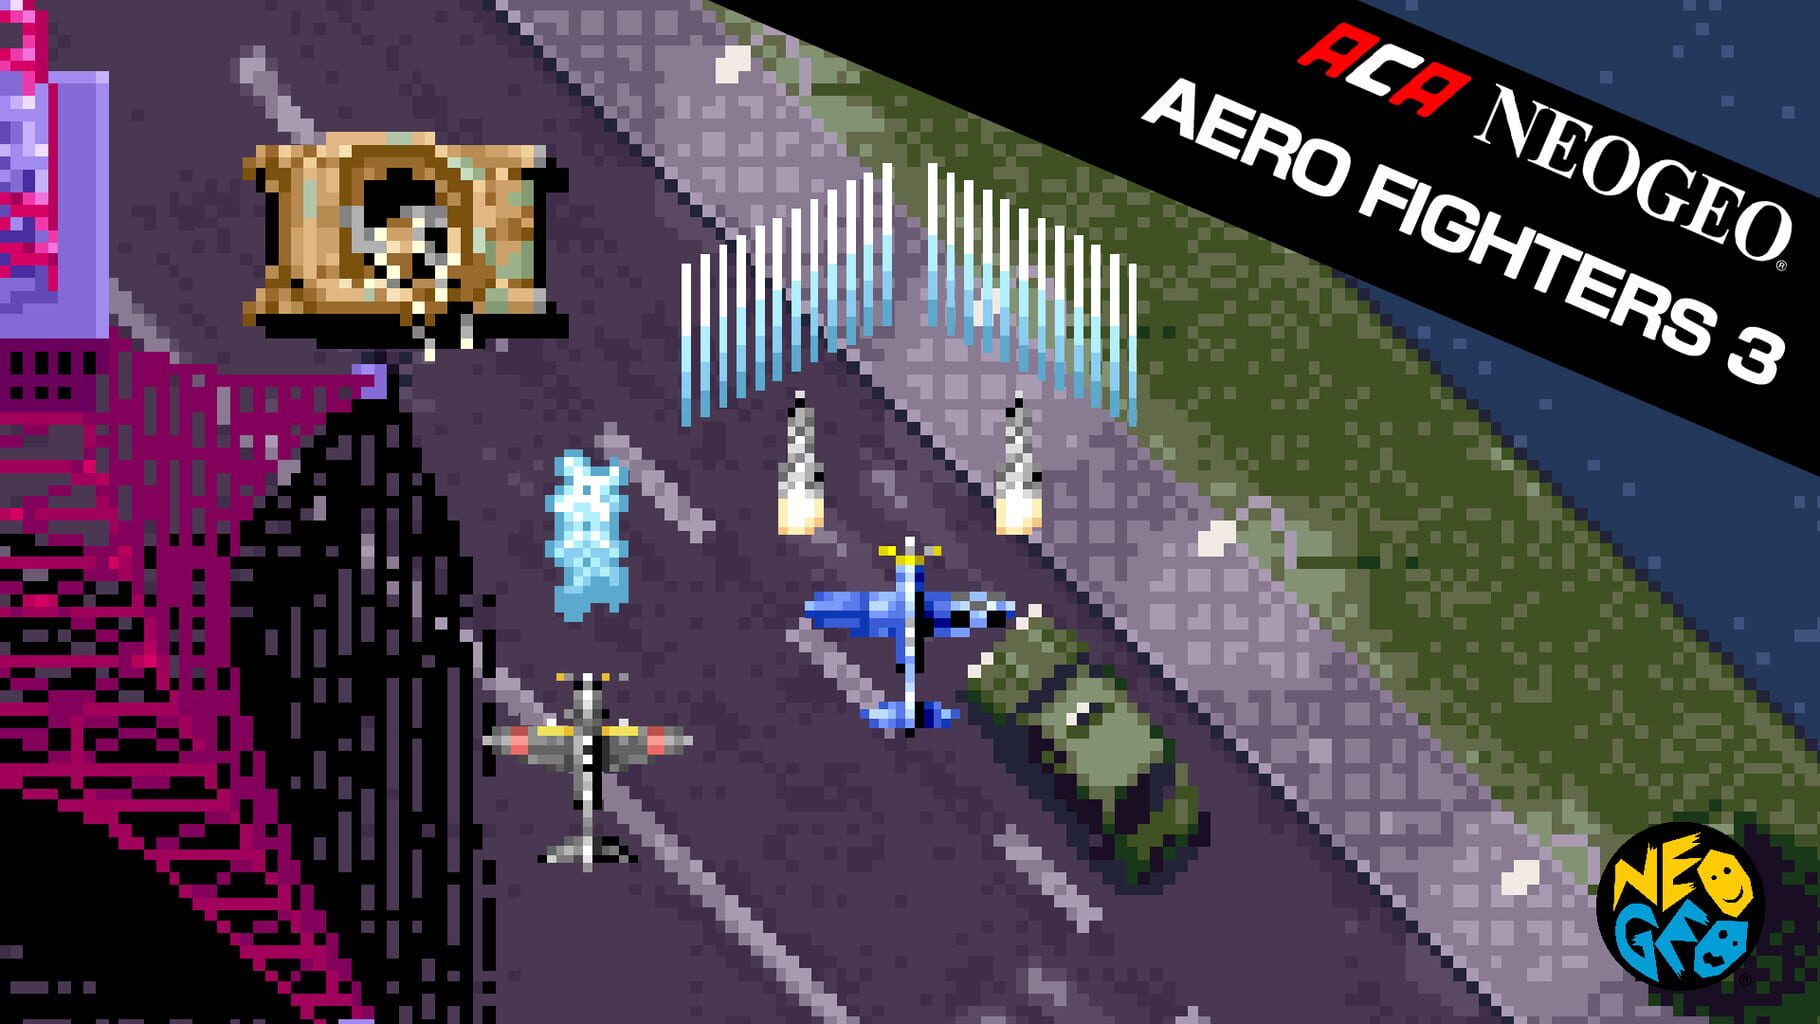 ACA Neo Geo: Aero Fighters 3 artwork